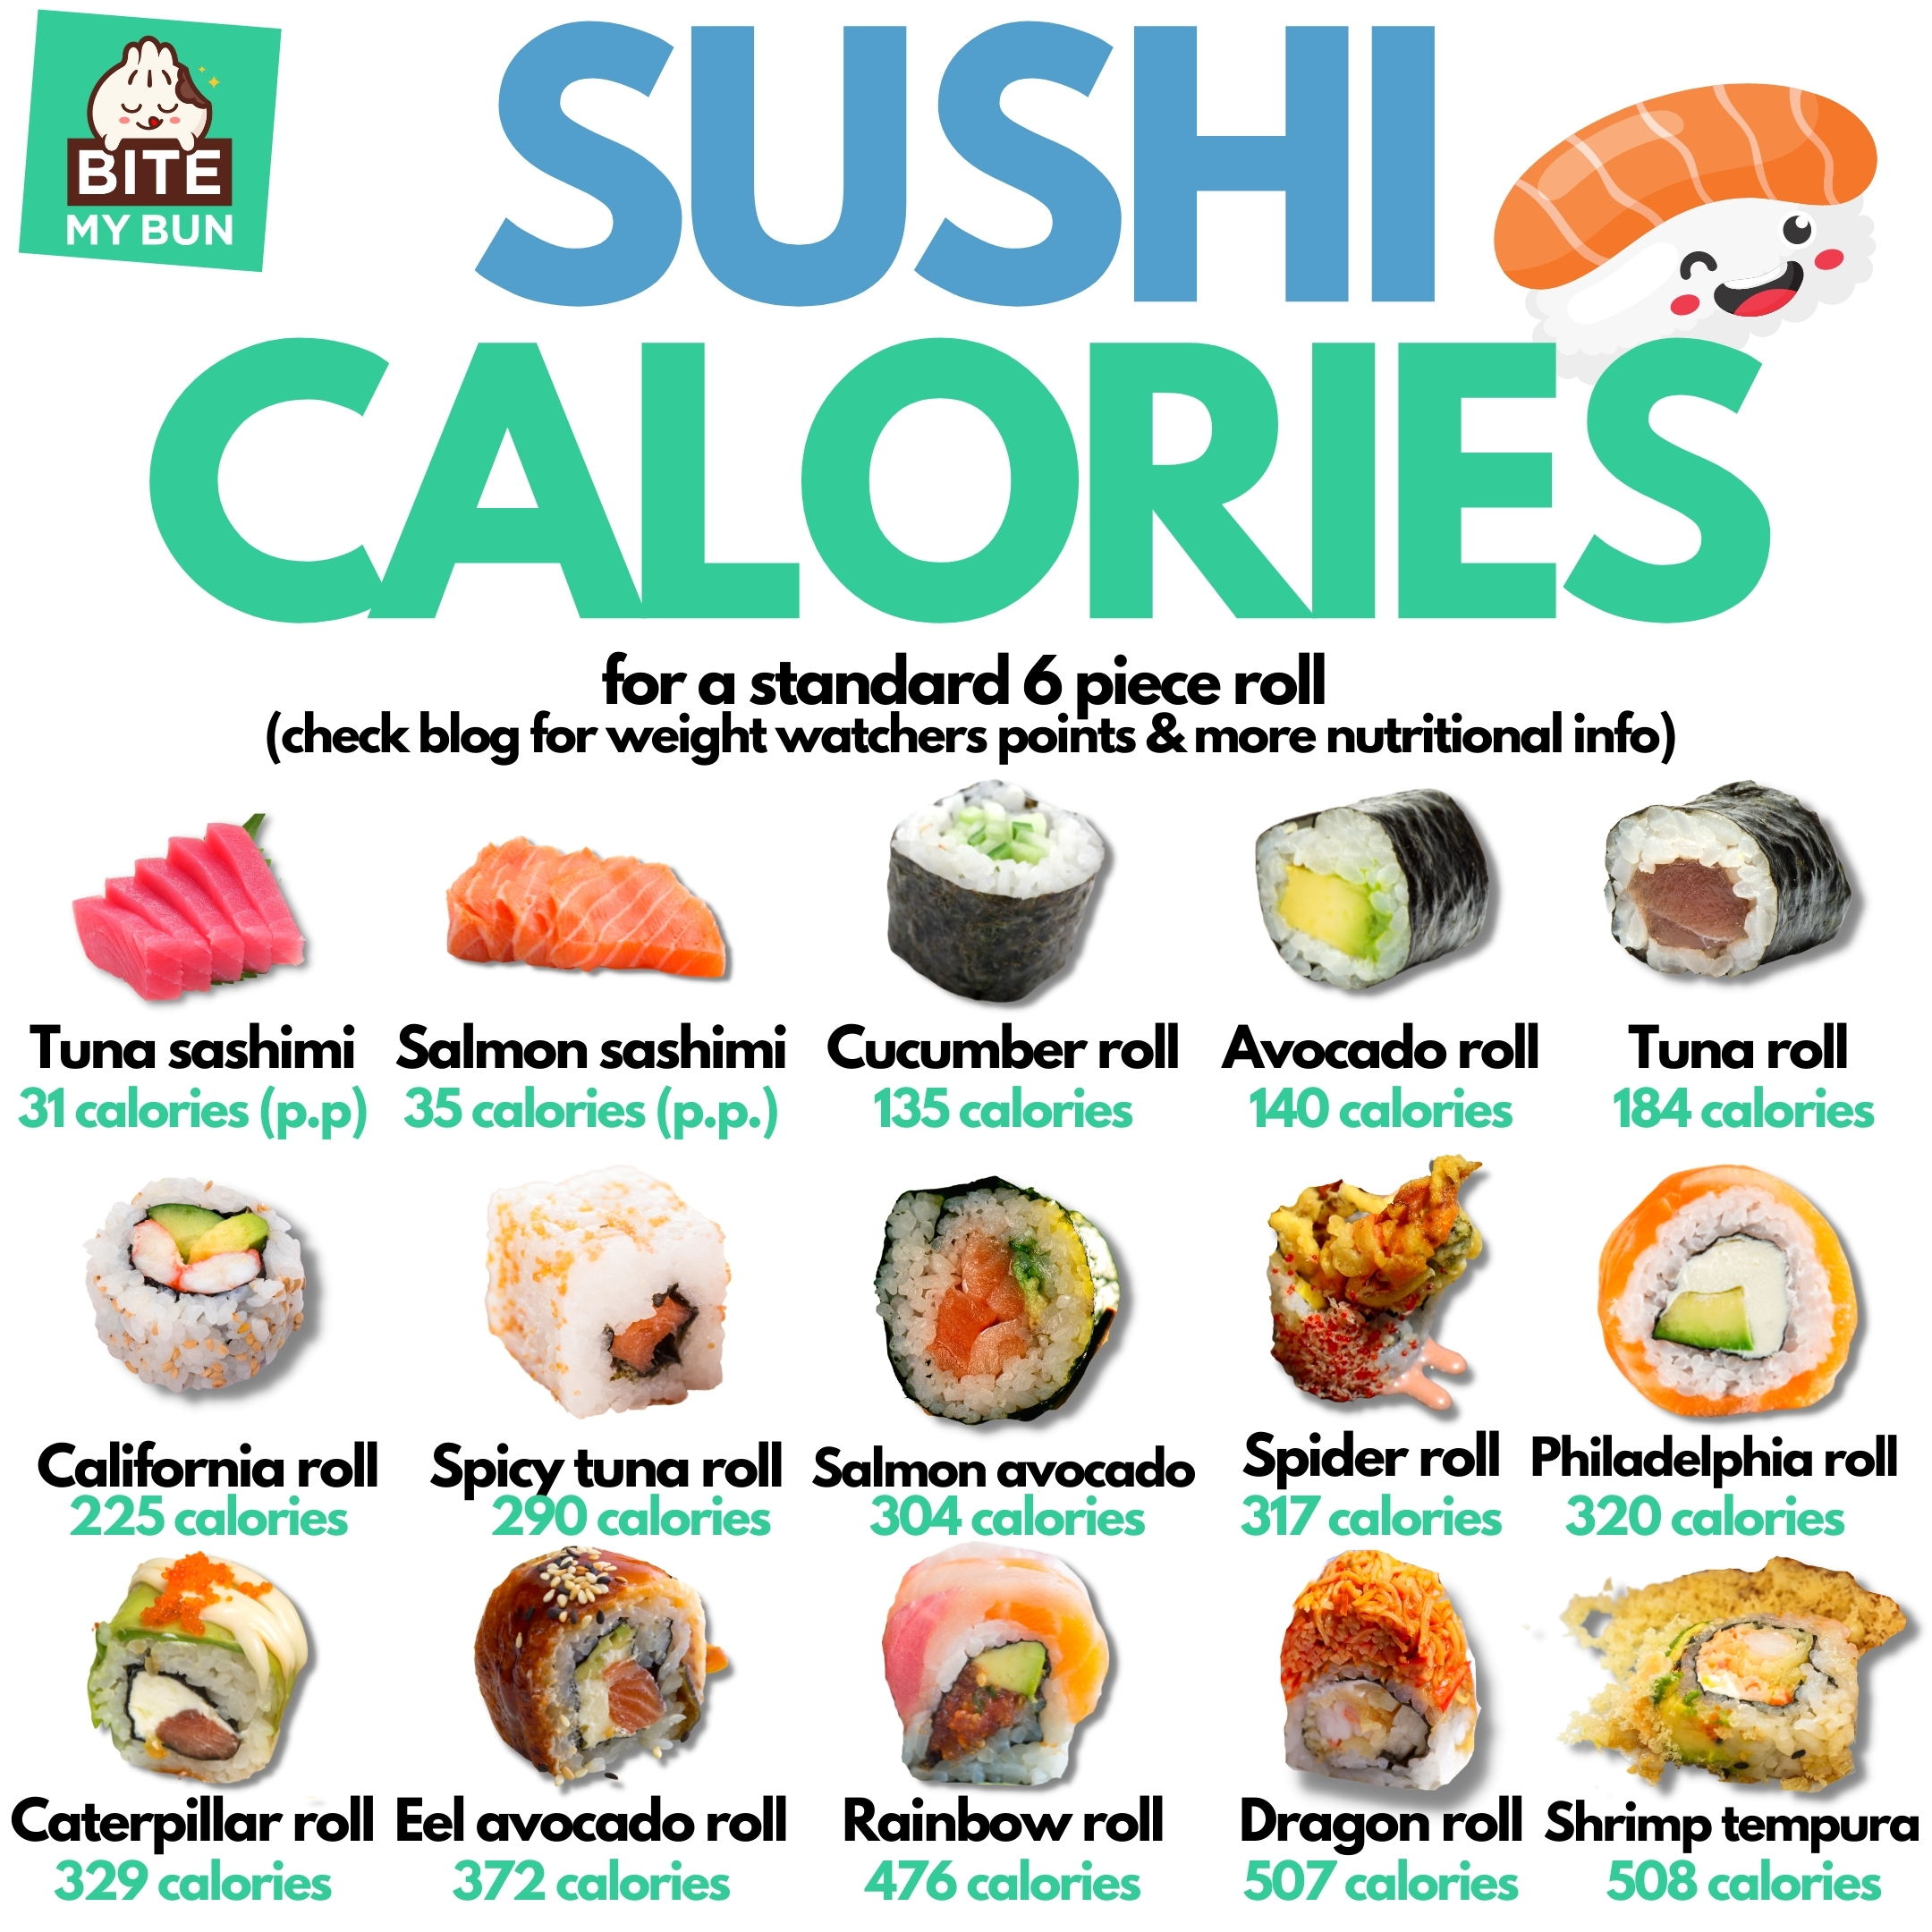 Calorias de sushi